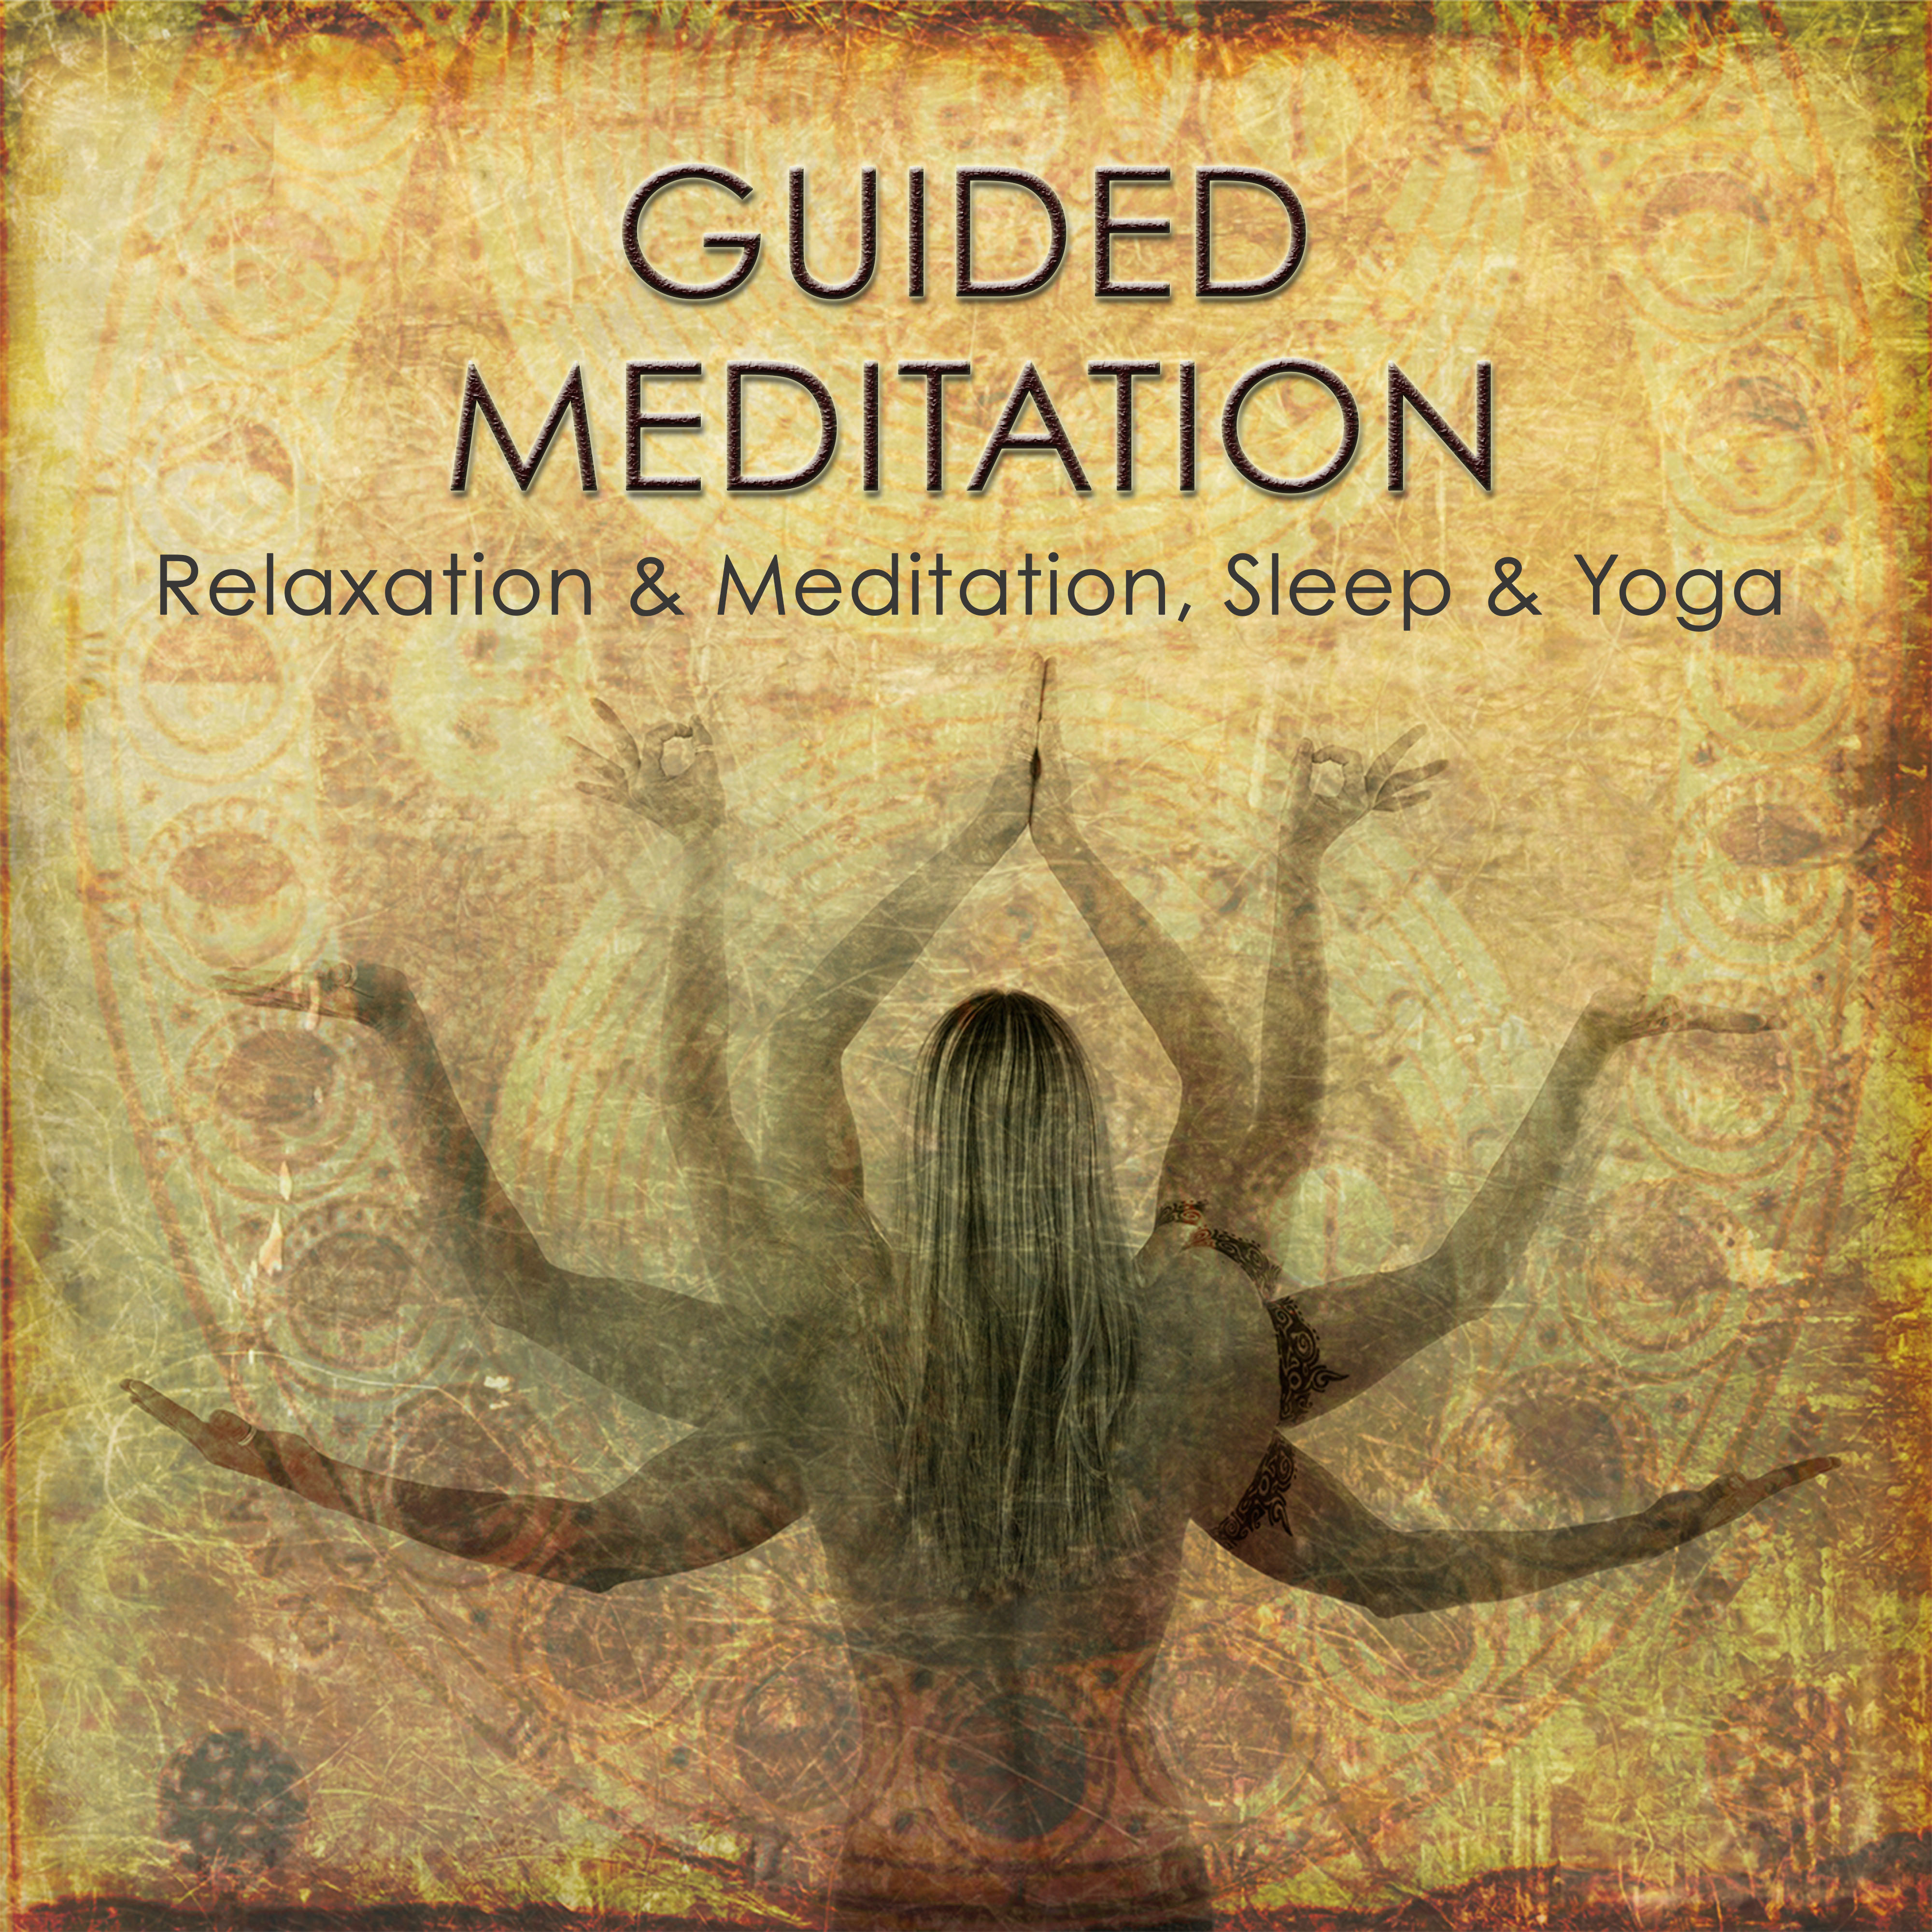 Guided Meditation to Relaxation & Meditation, Sleep & Yoga